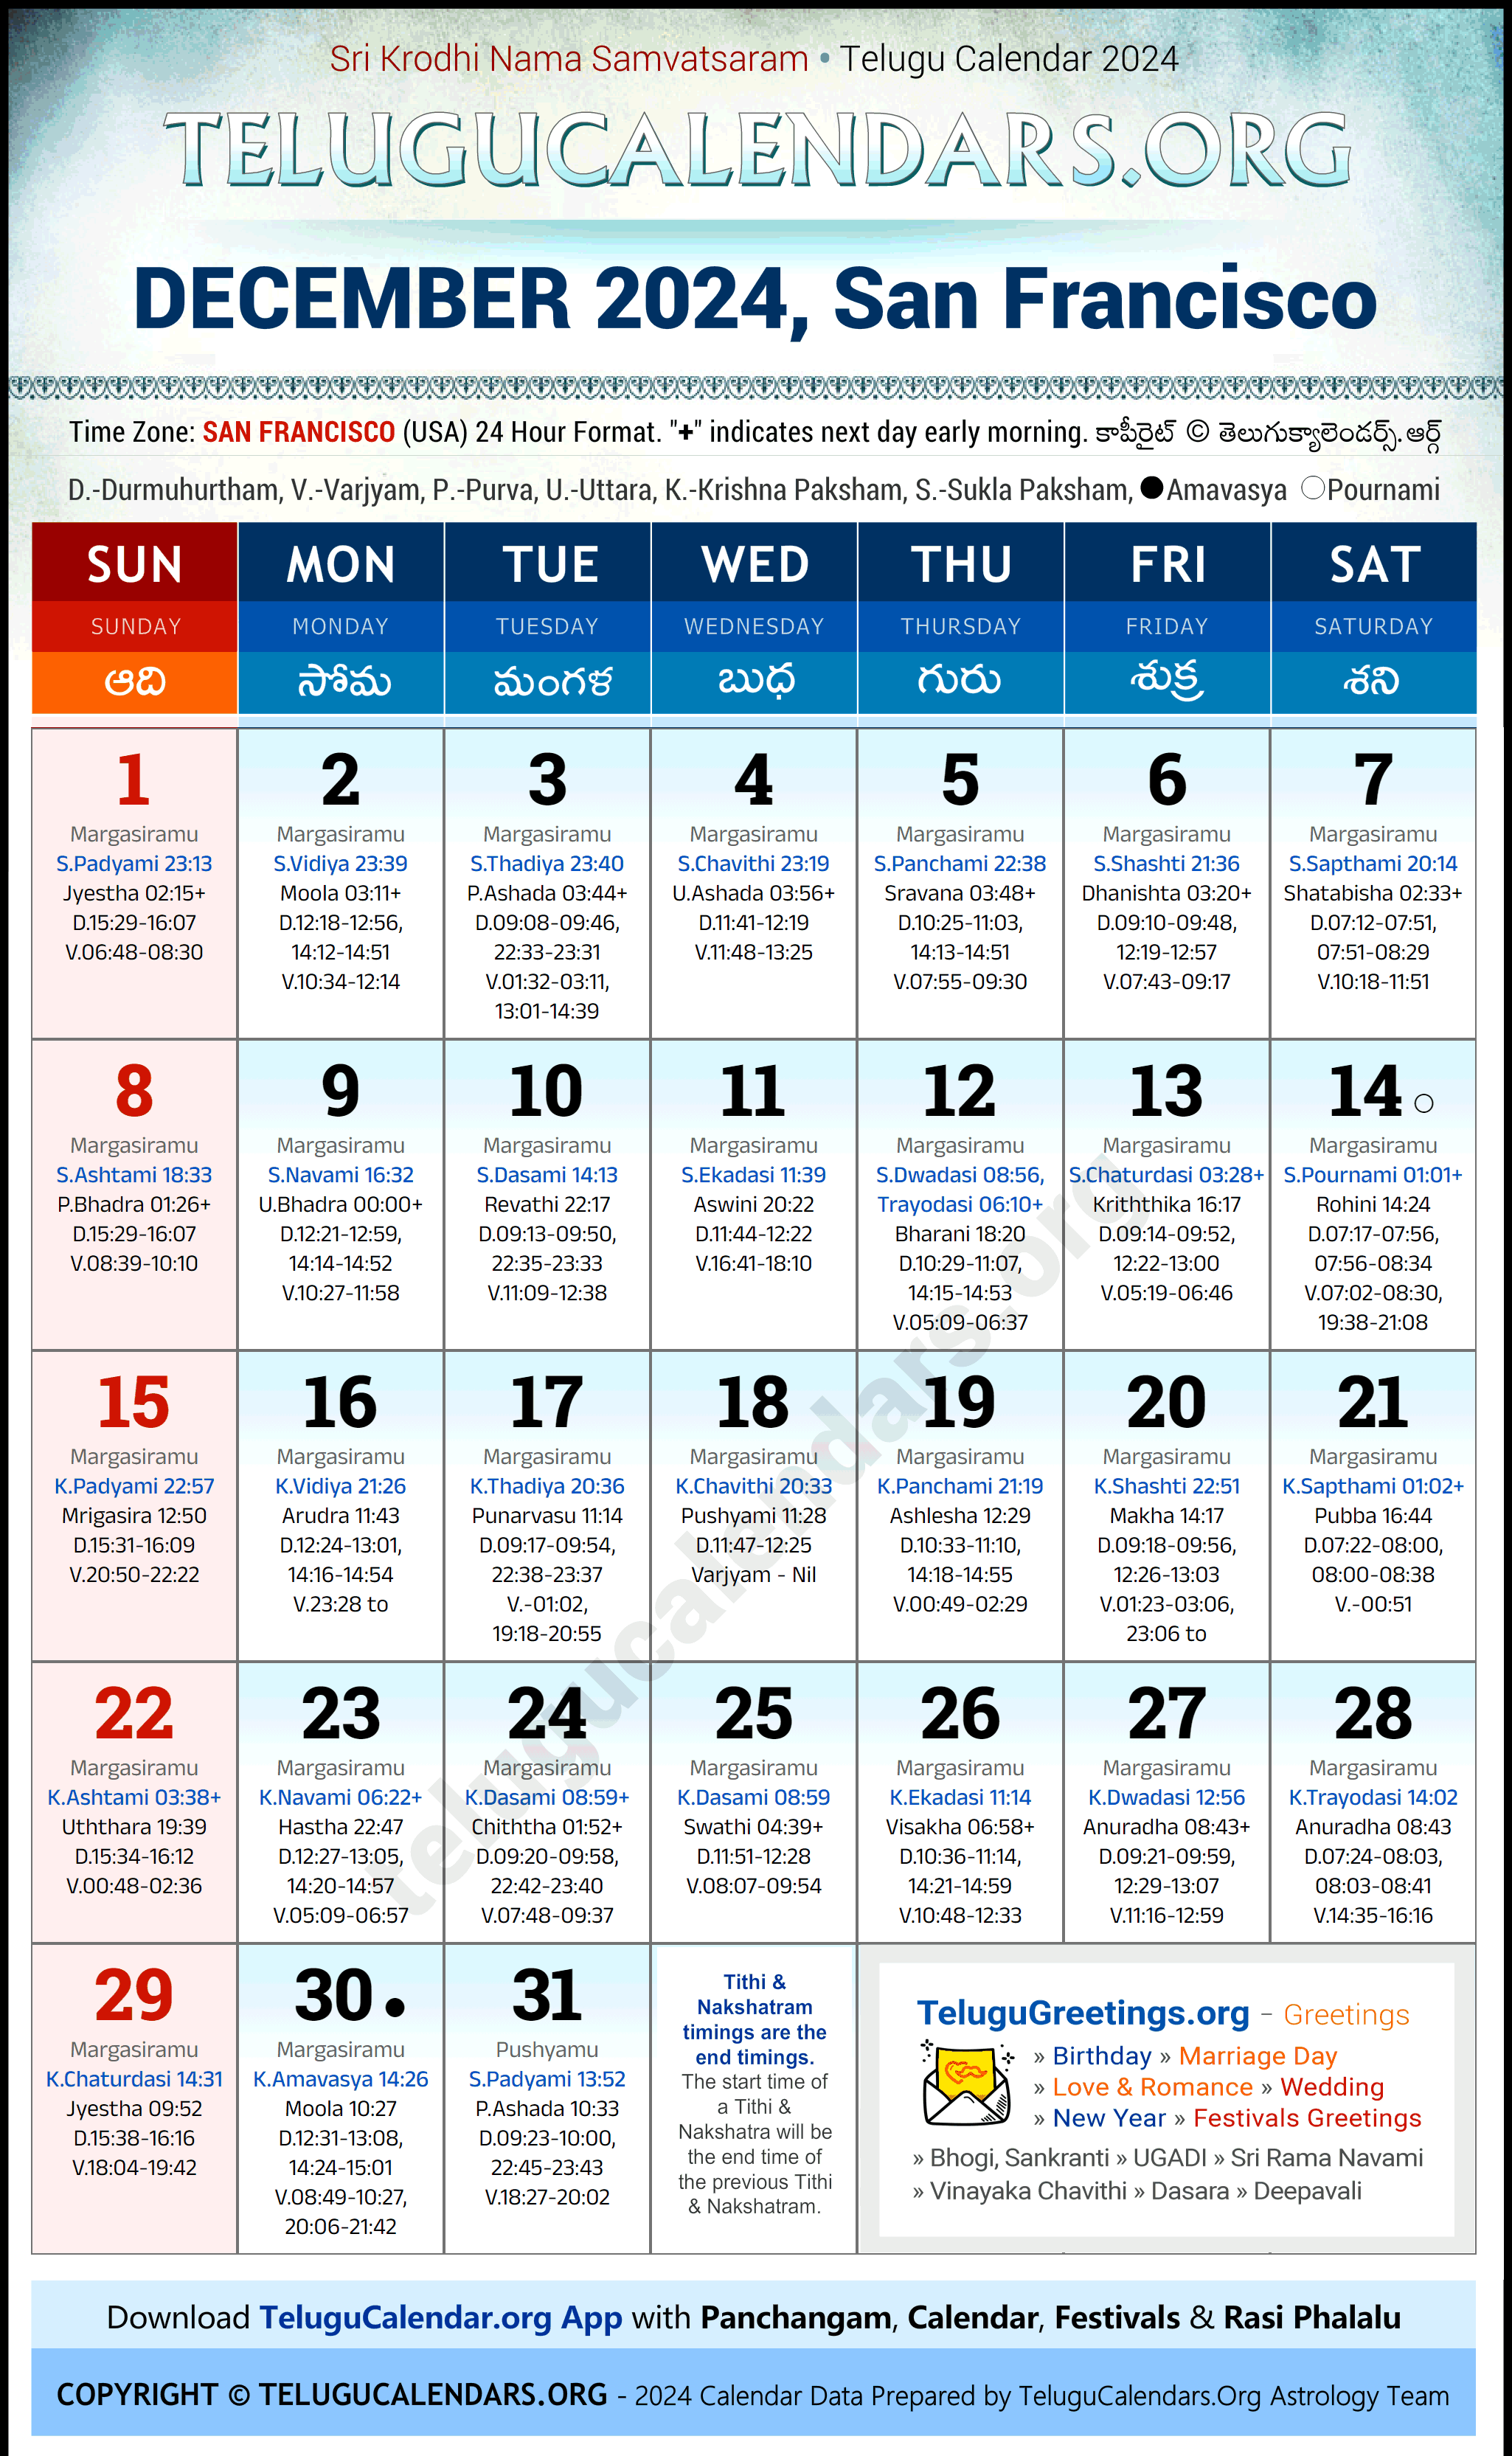 Telugu Calendar 2024 December Festivals for San Francisco